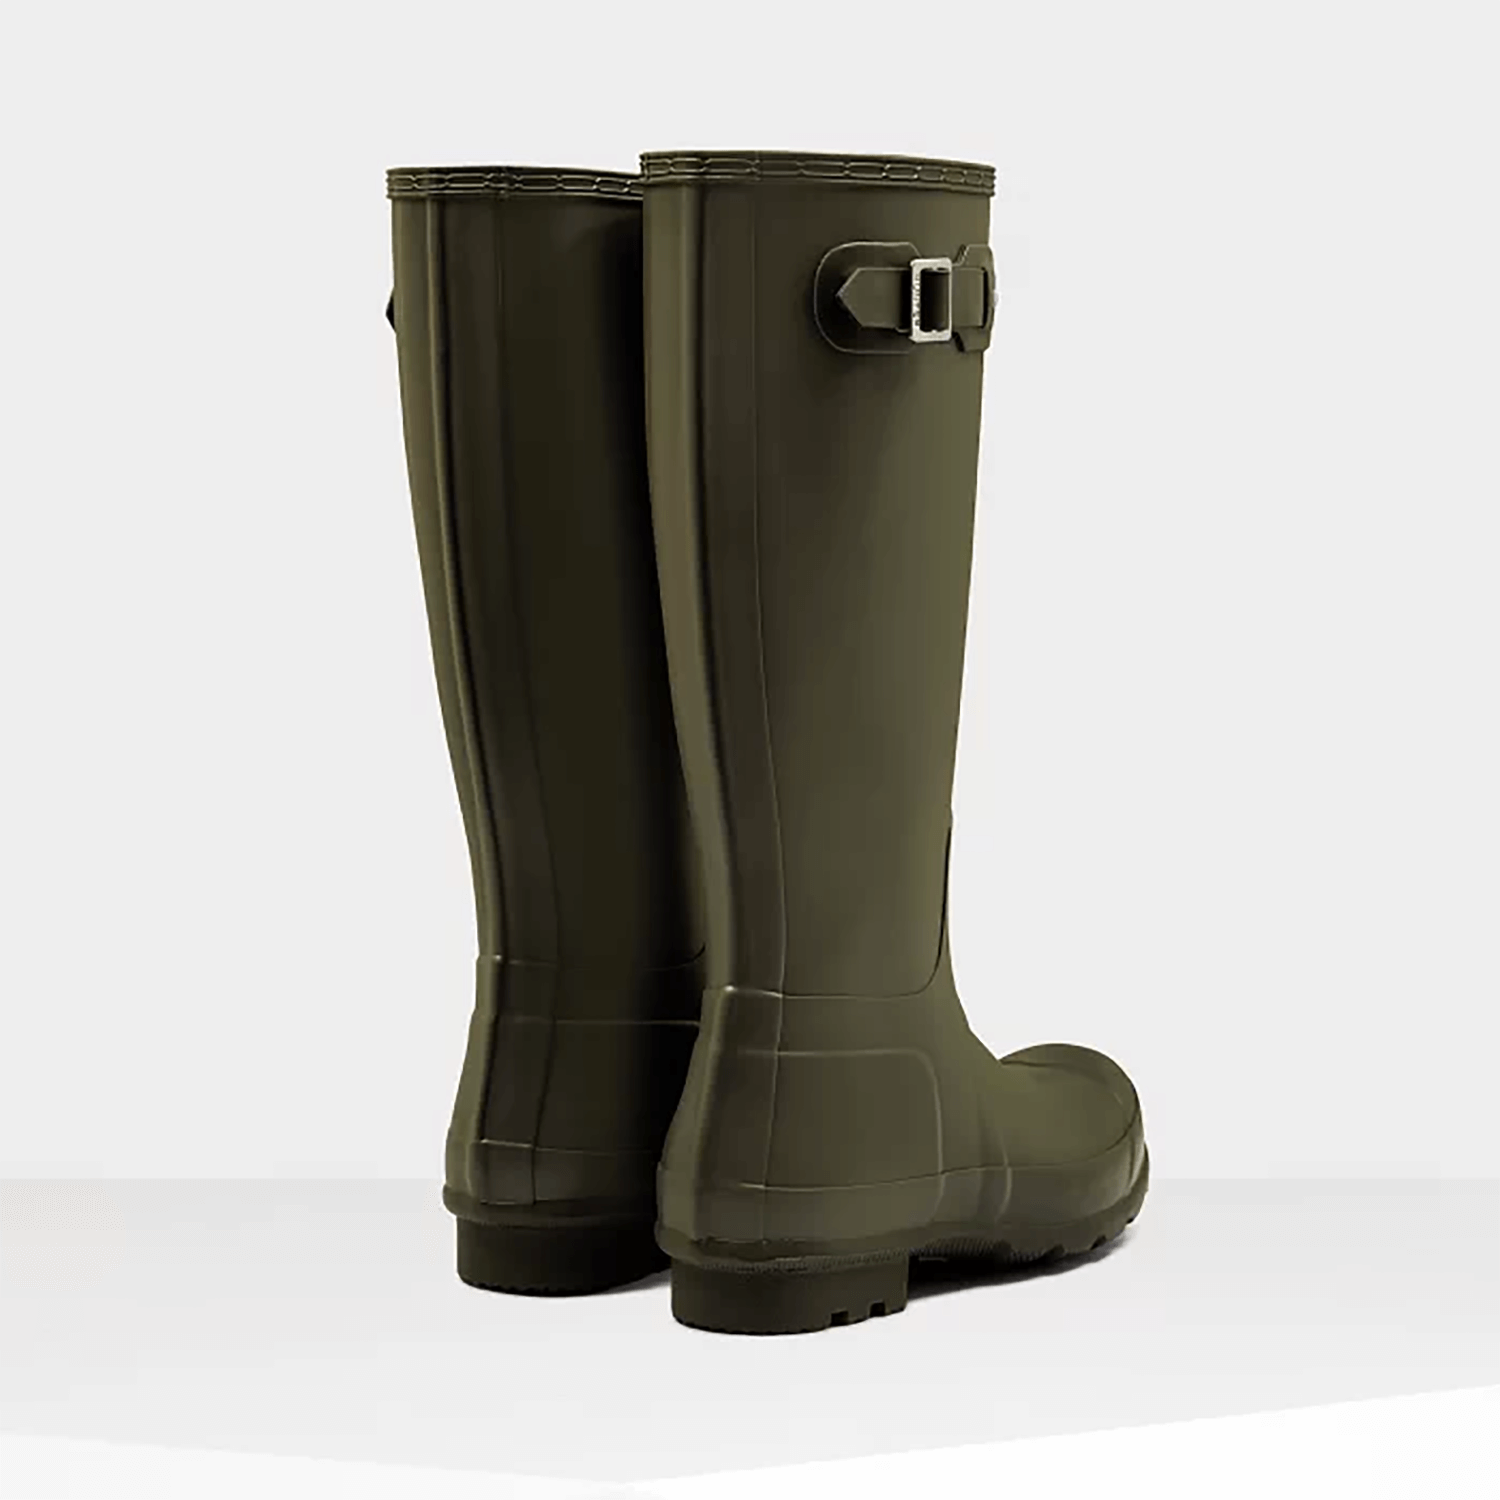 Mens Original Tall Hunter Boots in Dark Olive - £69.5 | Garden4Less UK Shop